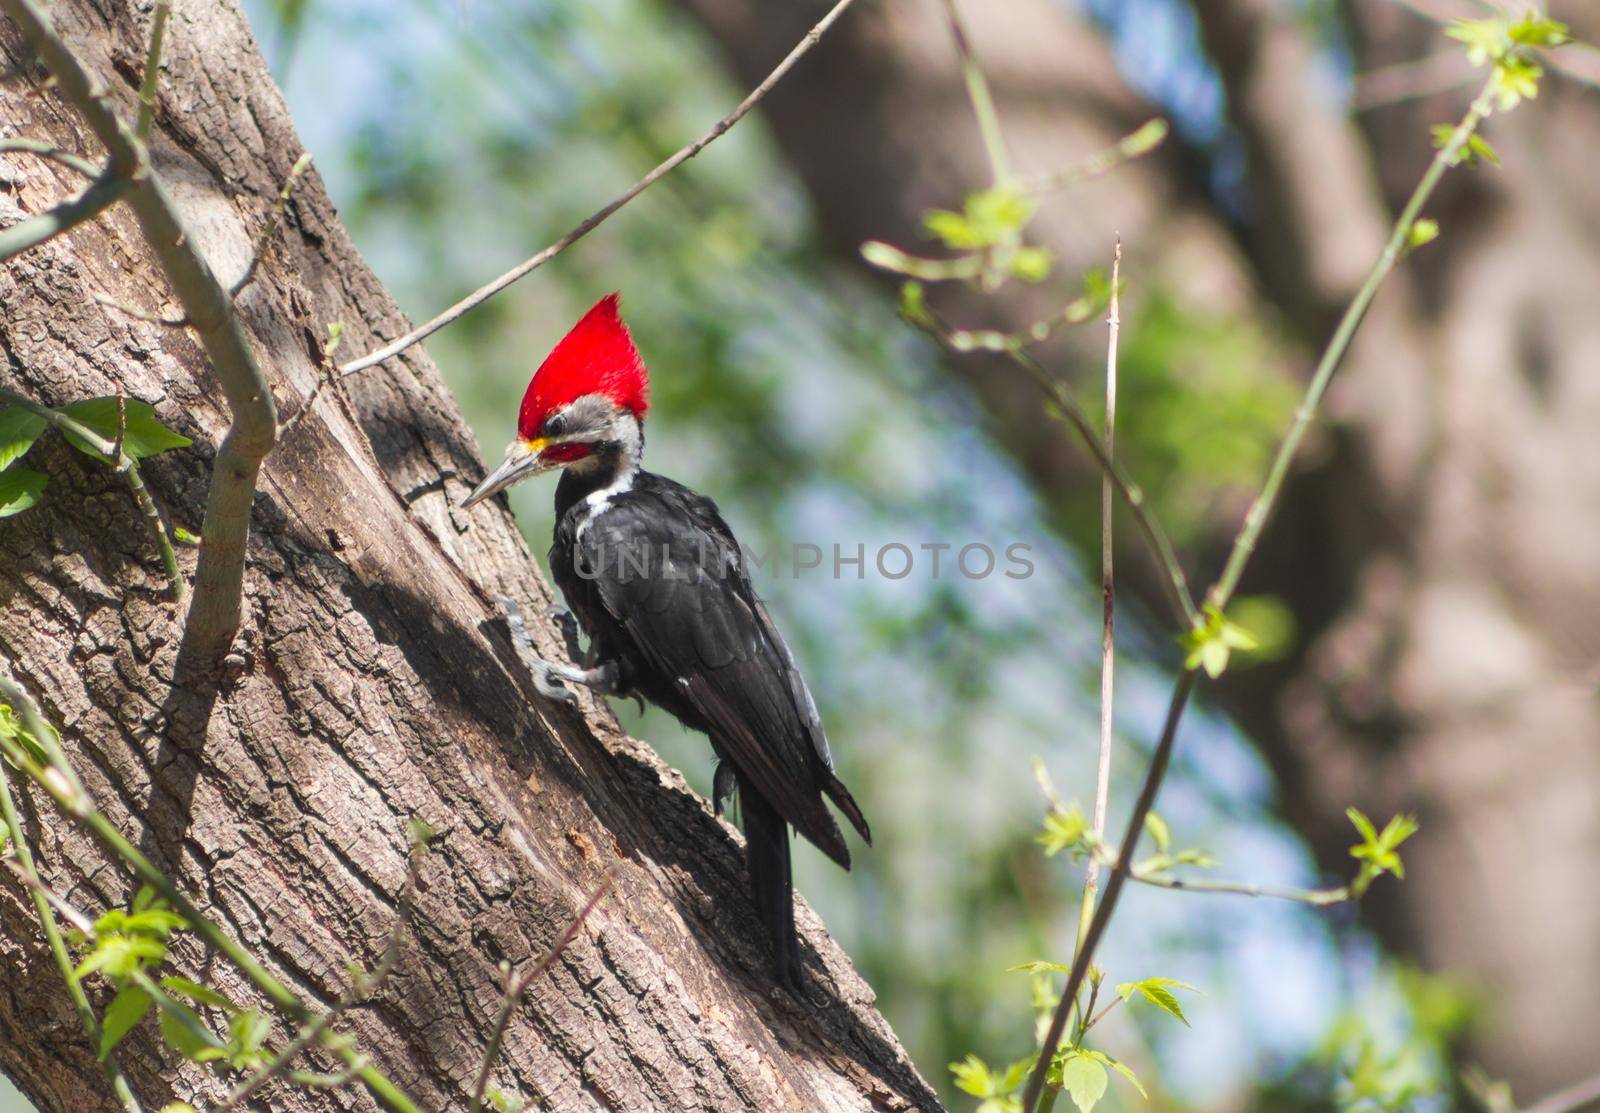 black woodpecker in its natural habitat in Cordoba Argentina by GabrielaBertolini